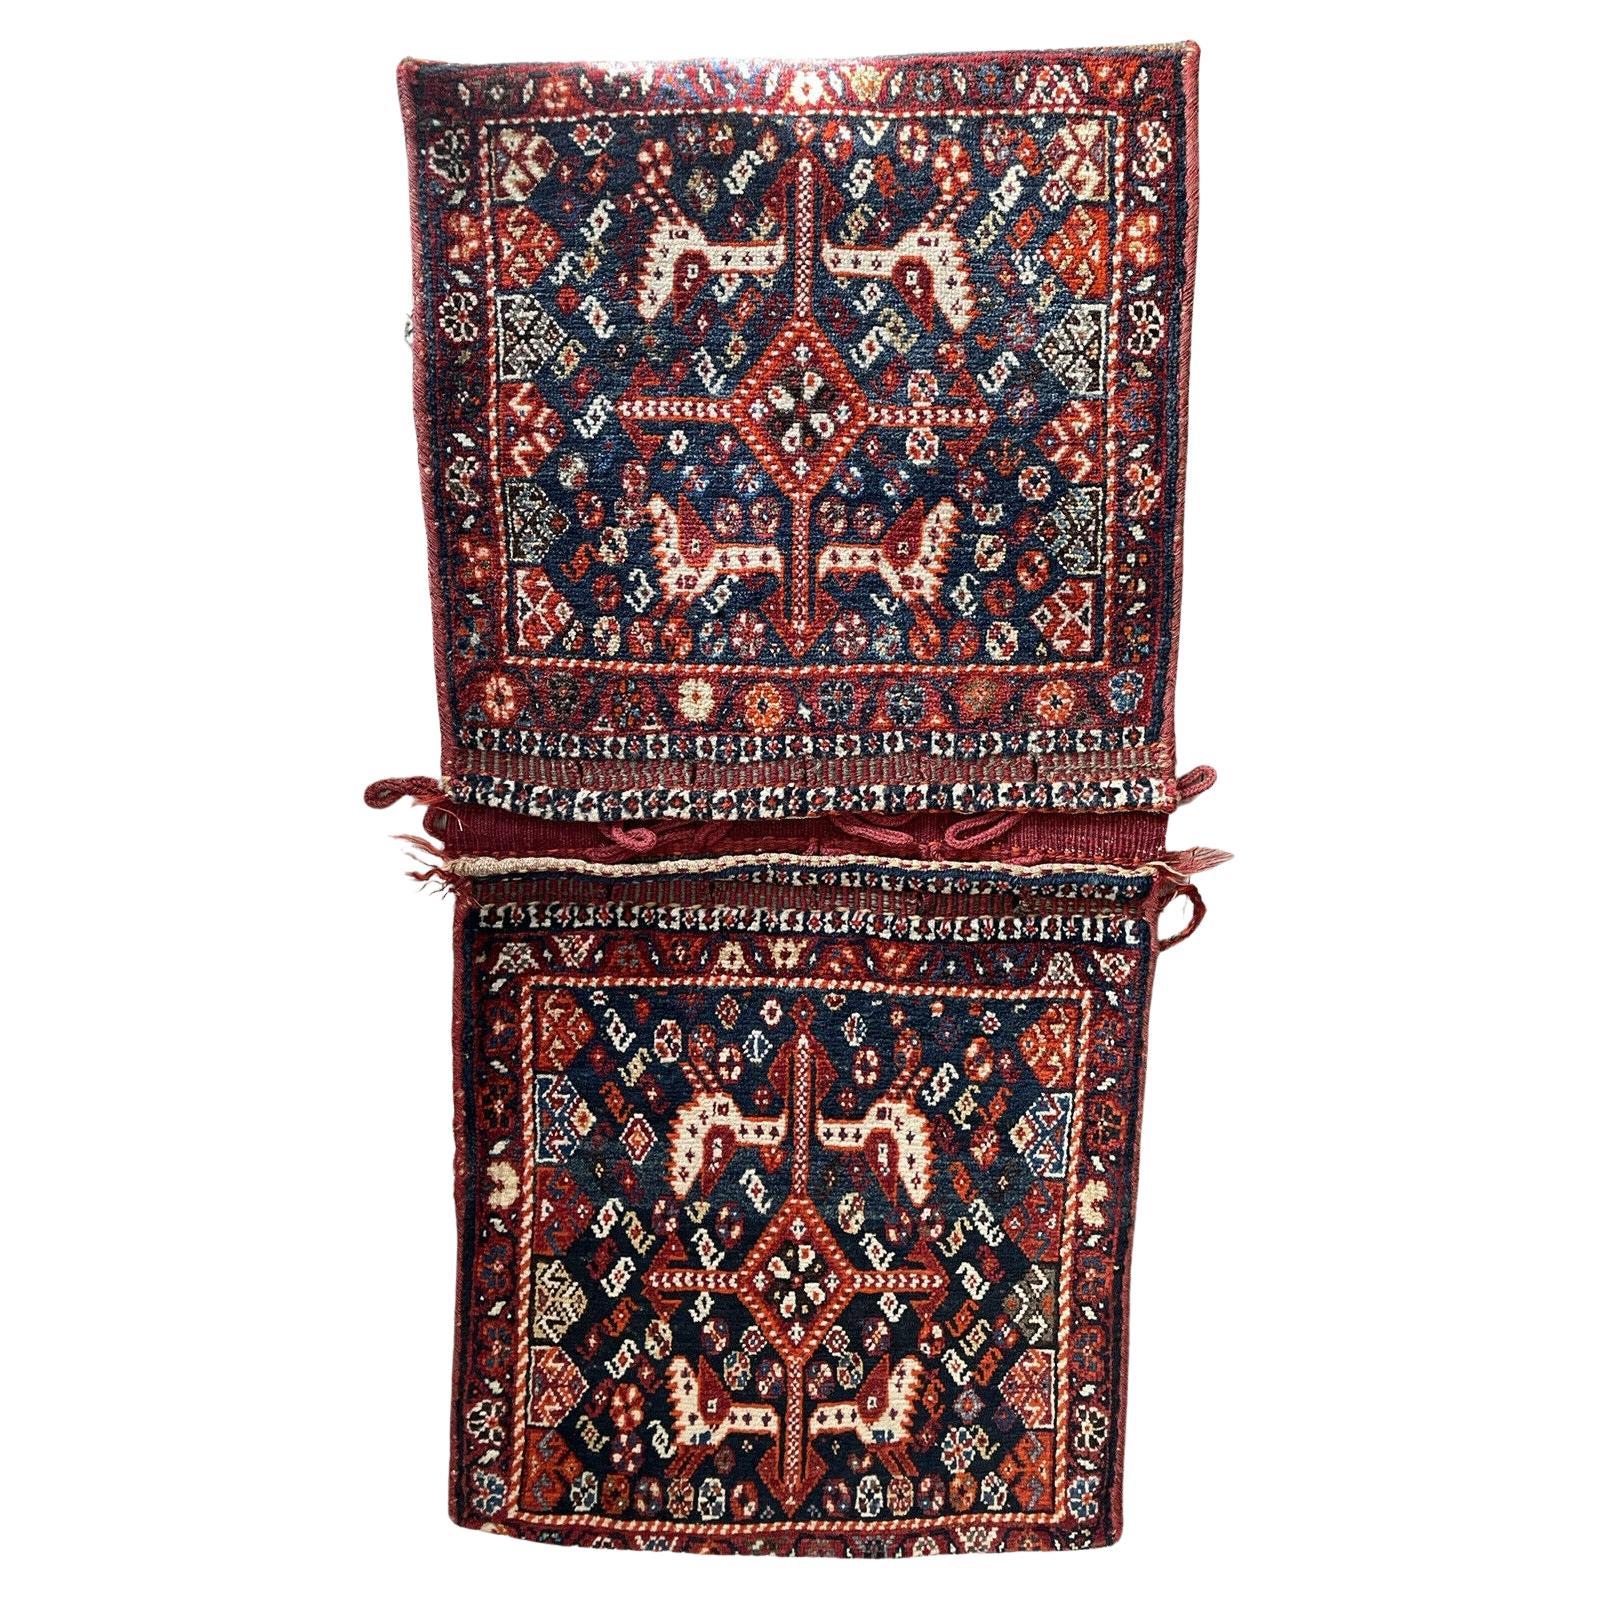 Handmade Antique Persian Collectible Gashkai Bag 1.7' x 3.5', 1900s - 1N20